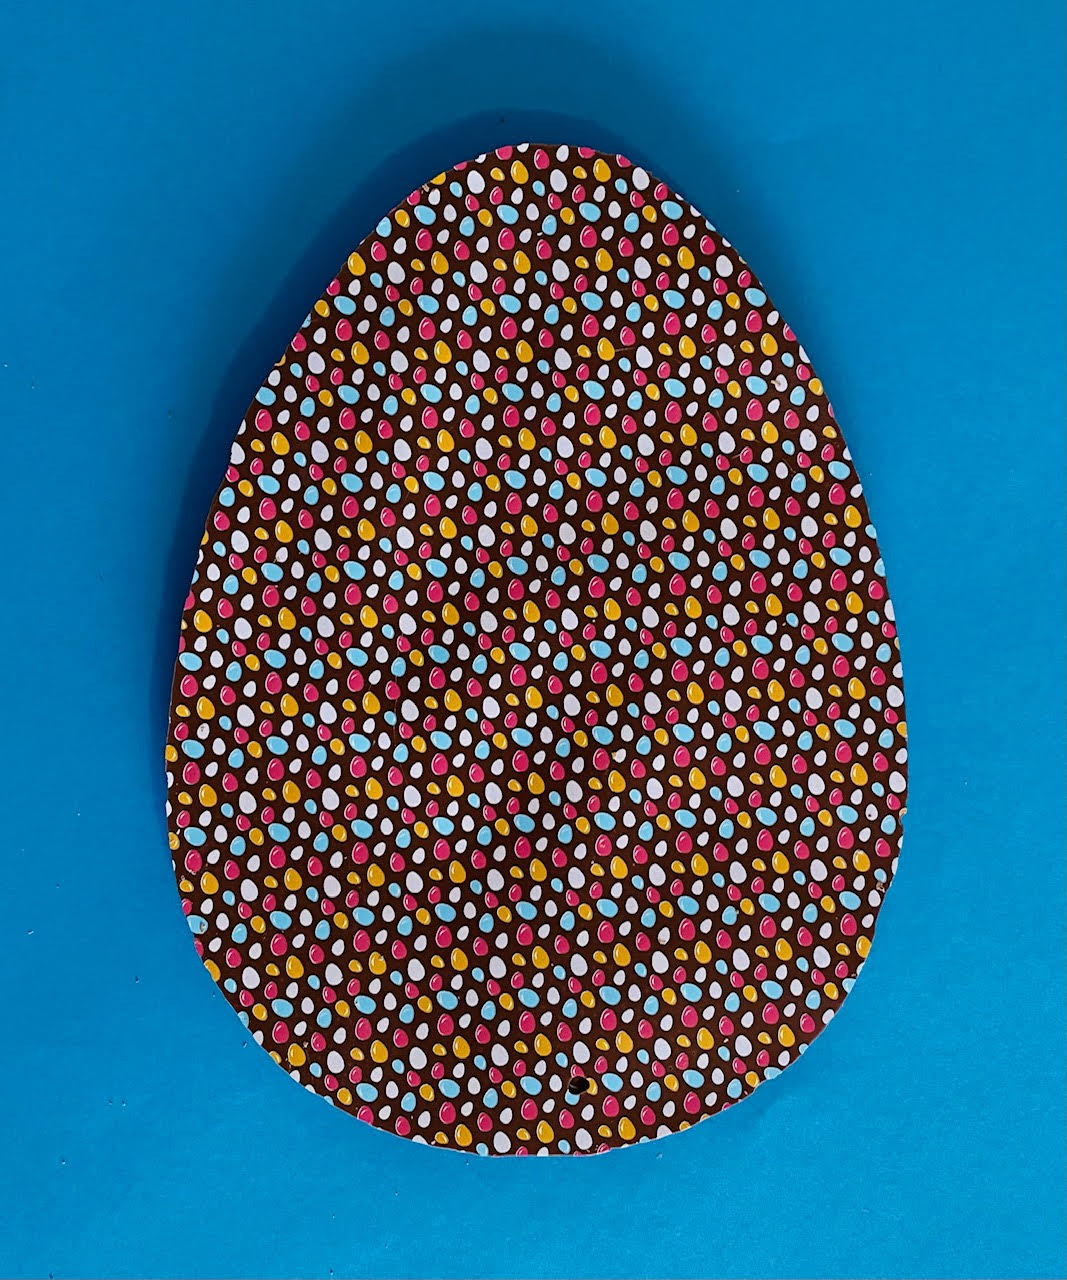 Coloured eggs